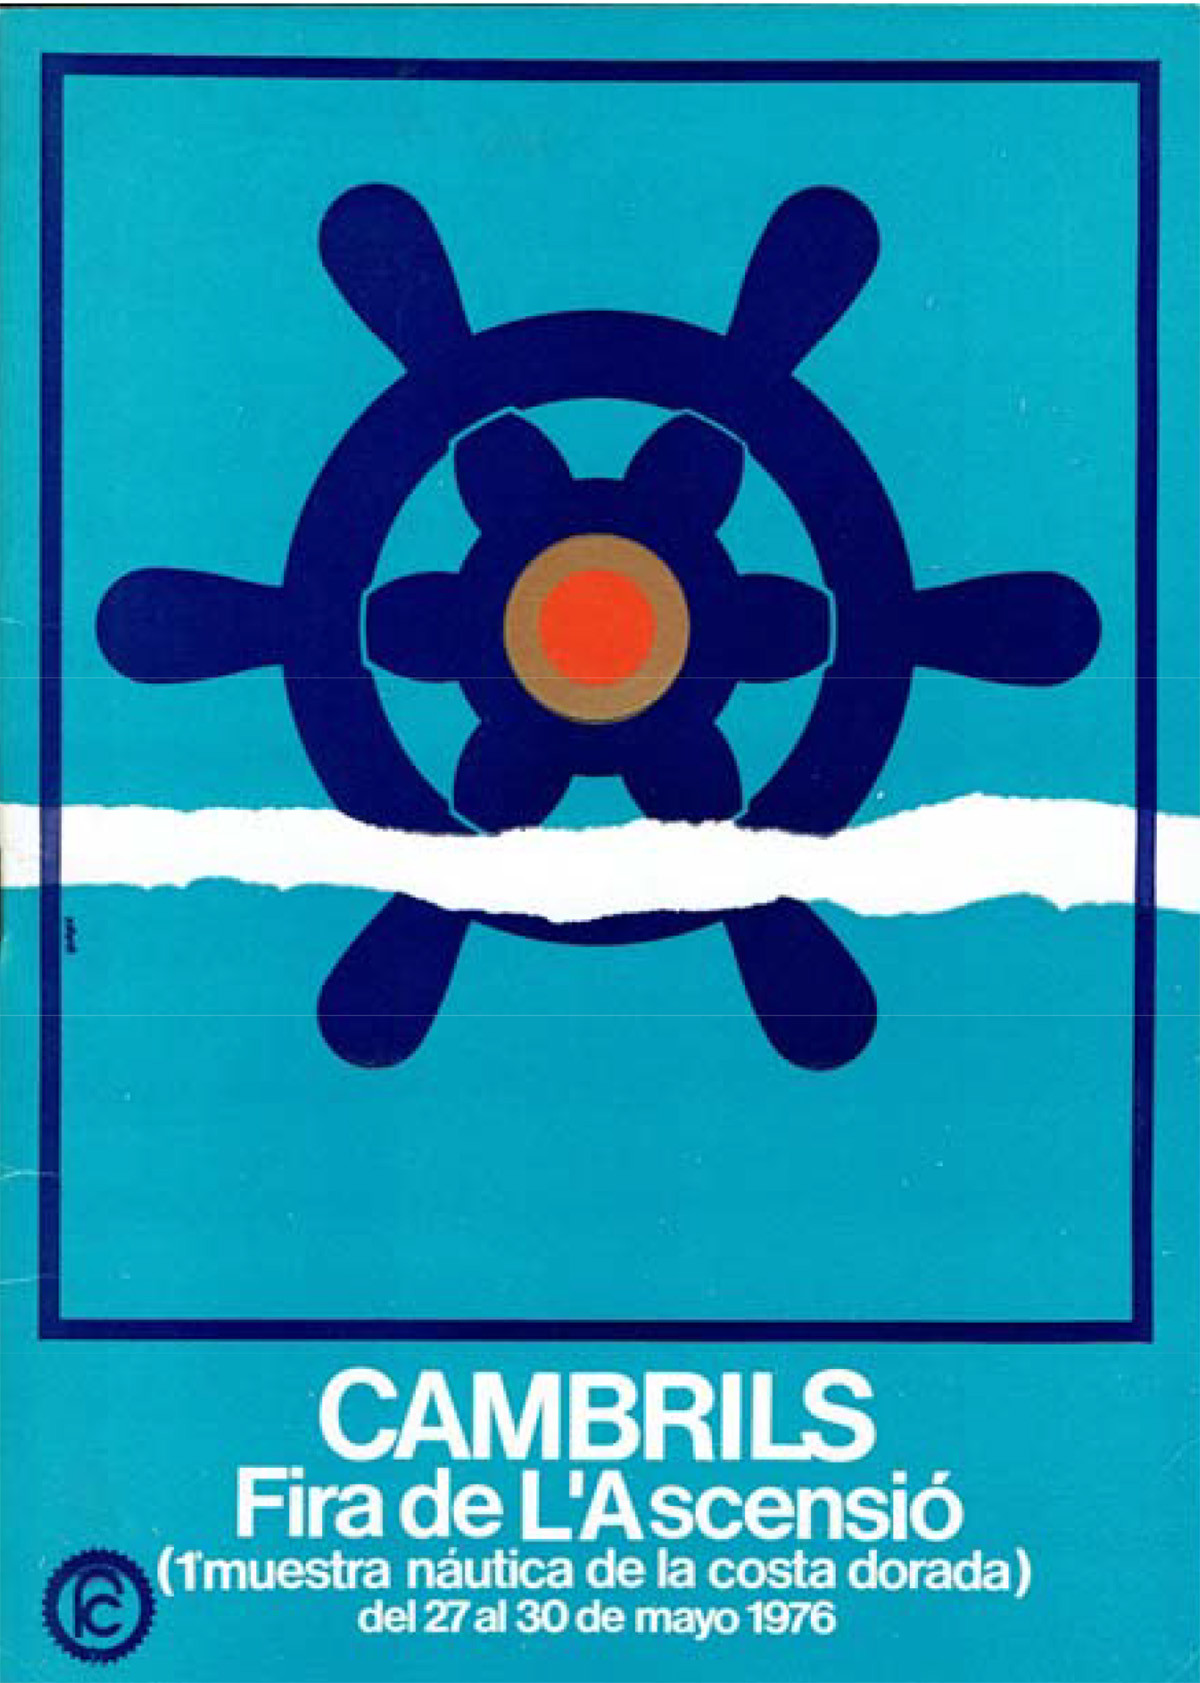 fira cambrils 1976